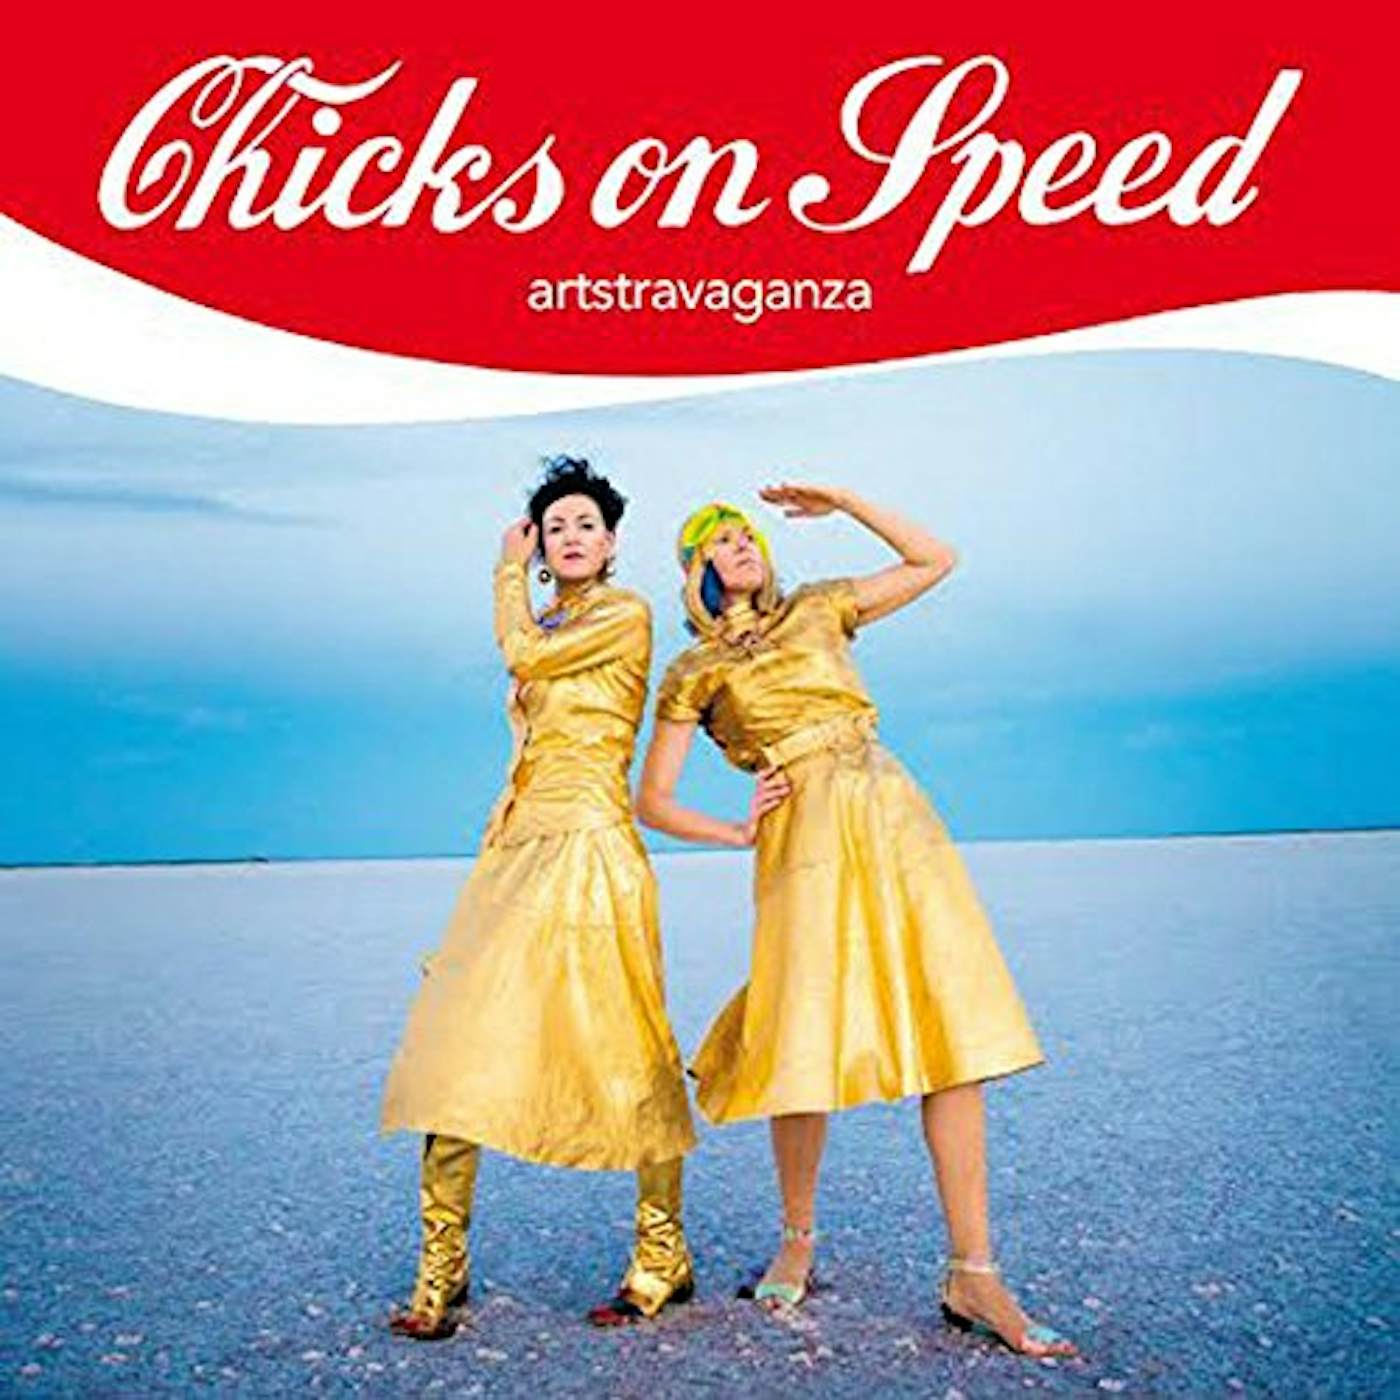 Chicks On Speed Artstravaganza Vinyl Record